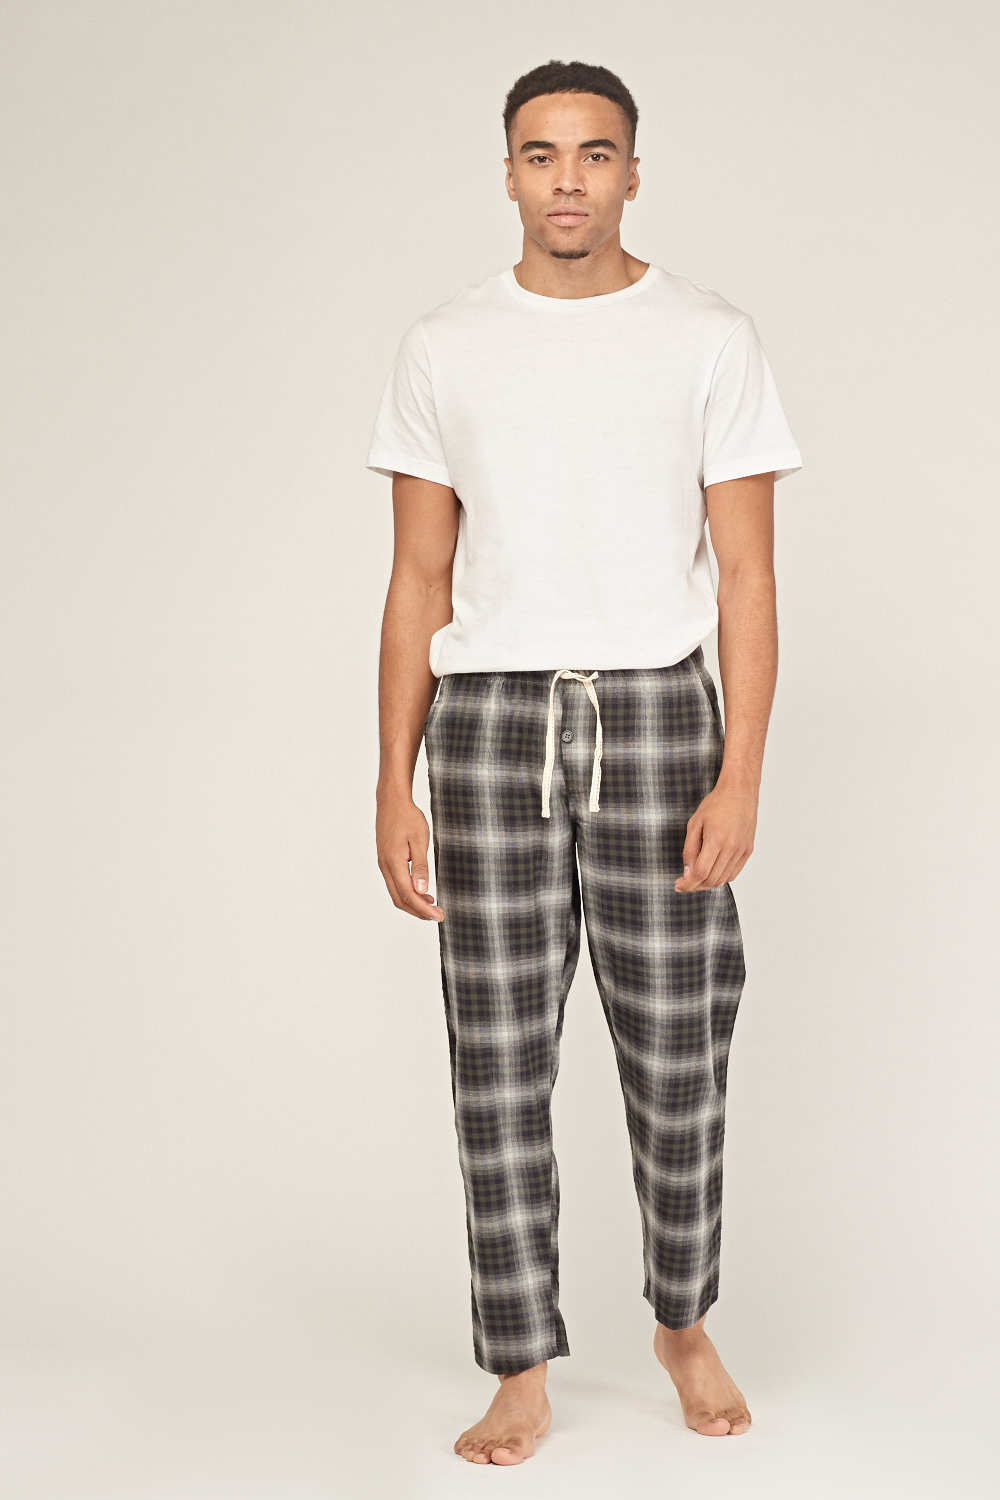 Grey Plaid Pyjama Trousers - Just $6